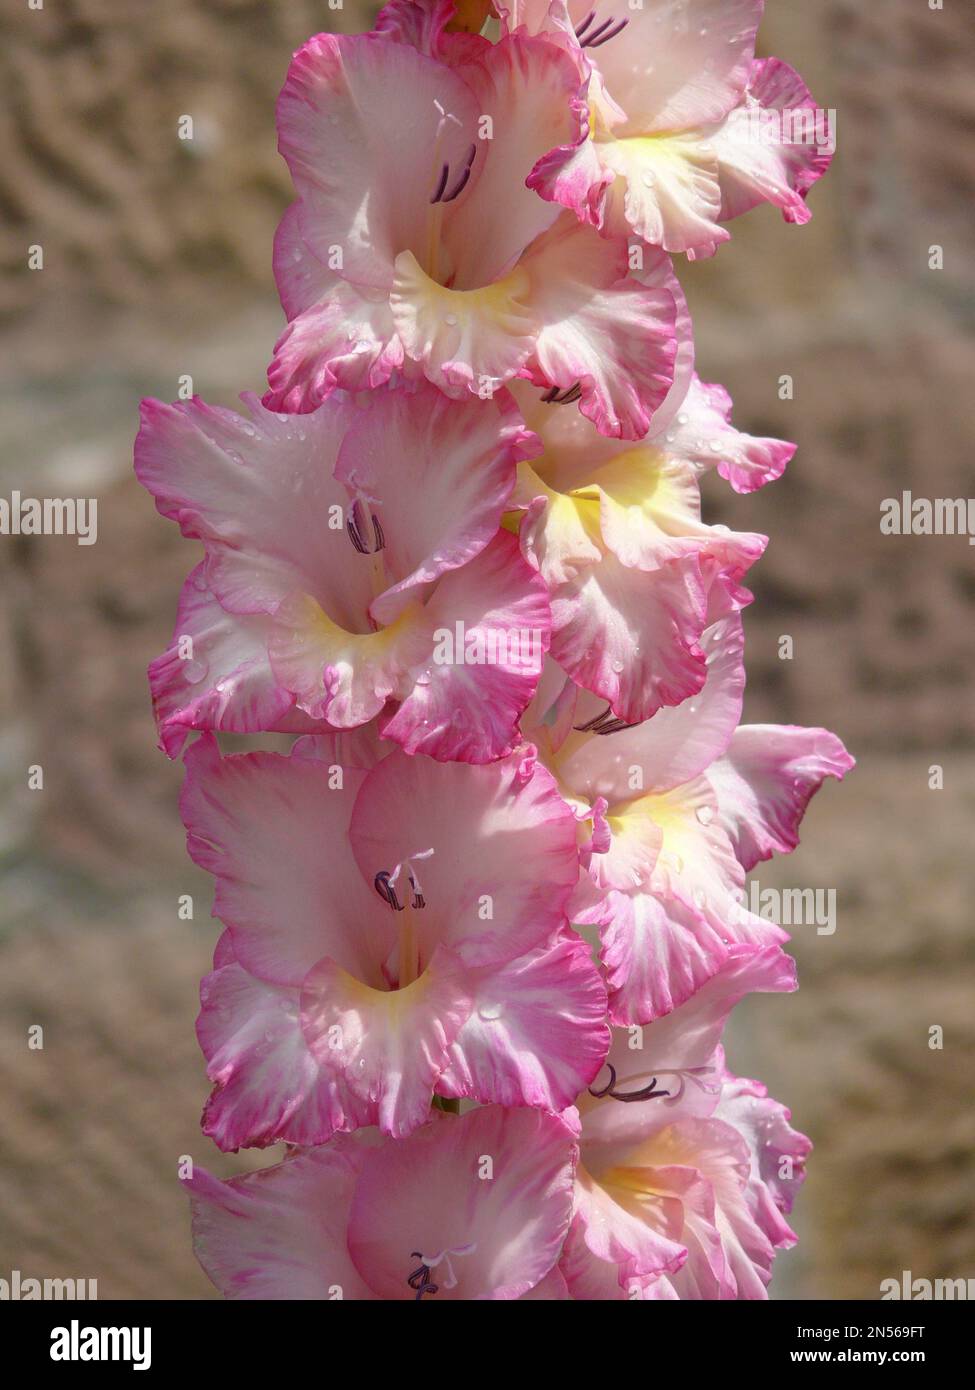 Gladioli (Gladiolus) close-up sword flower Stock Photo